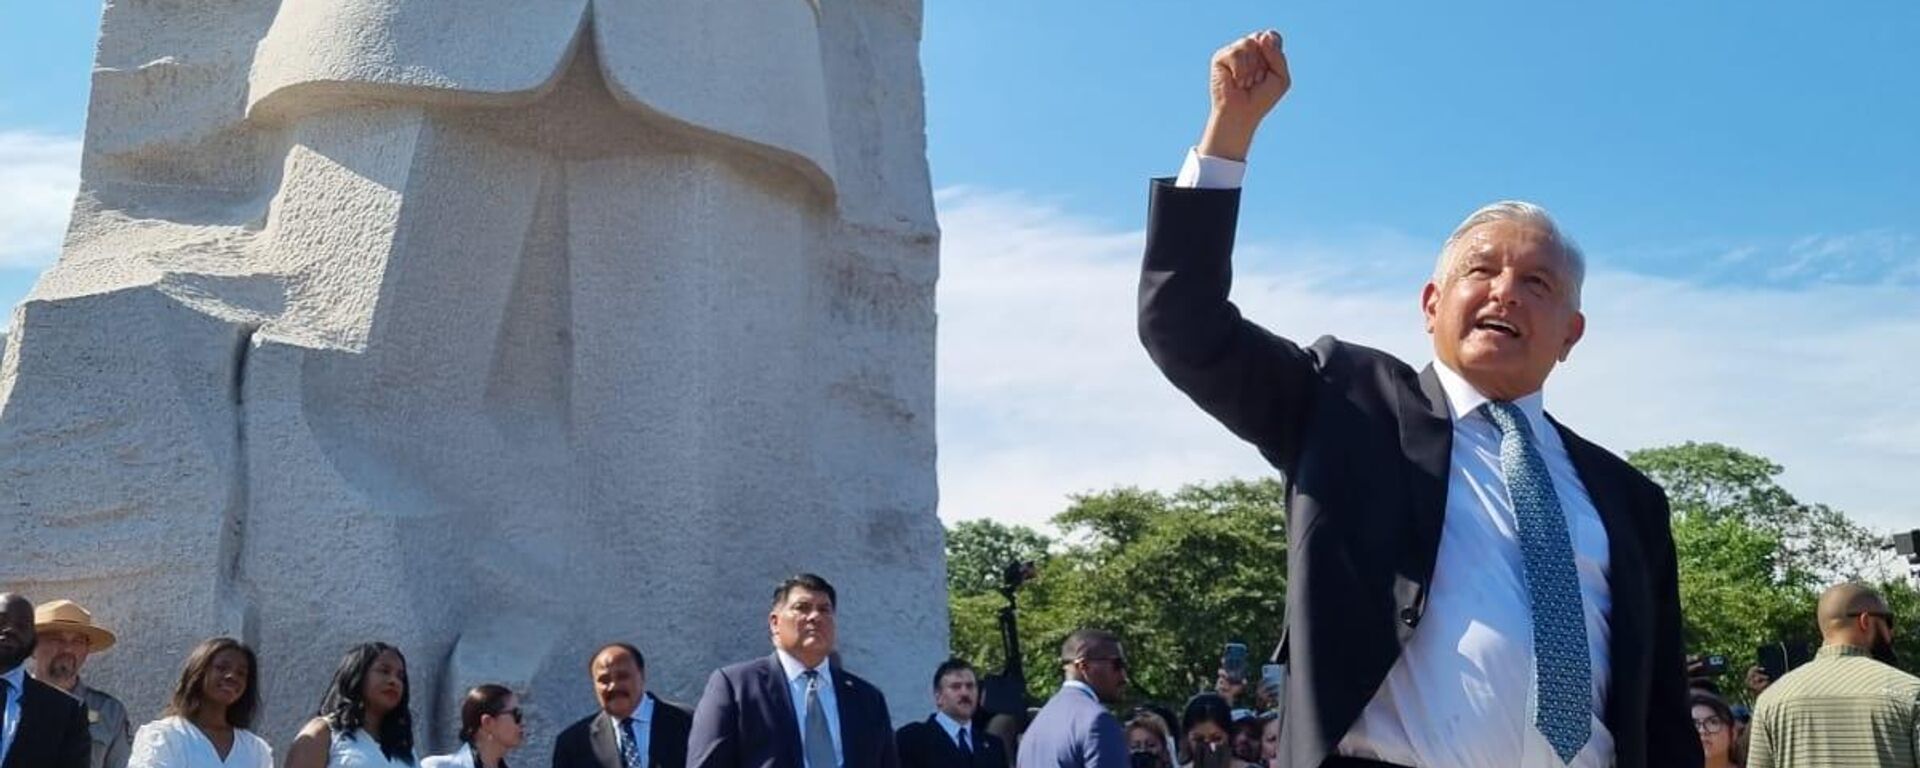 AMLO en el monumento a Martin Luther King - Sputnik Mundo, 1920, 23.07.2022